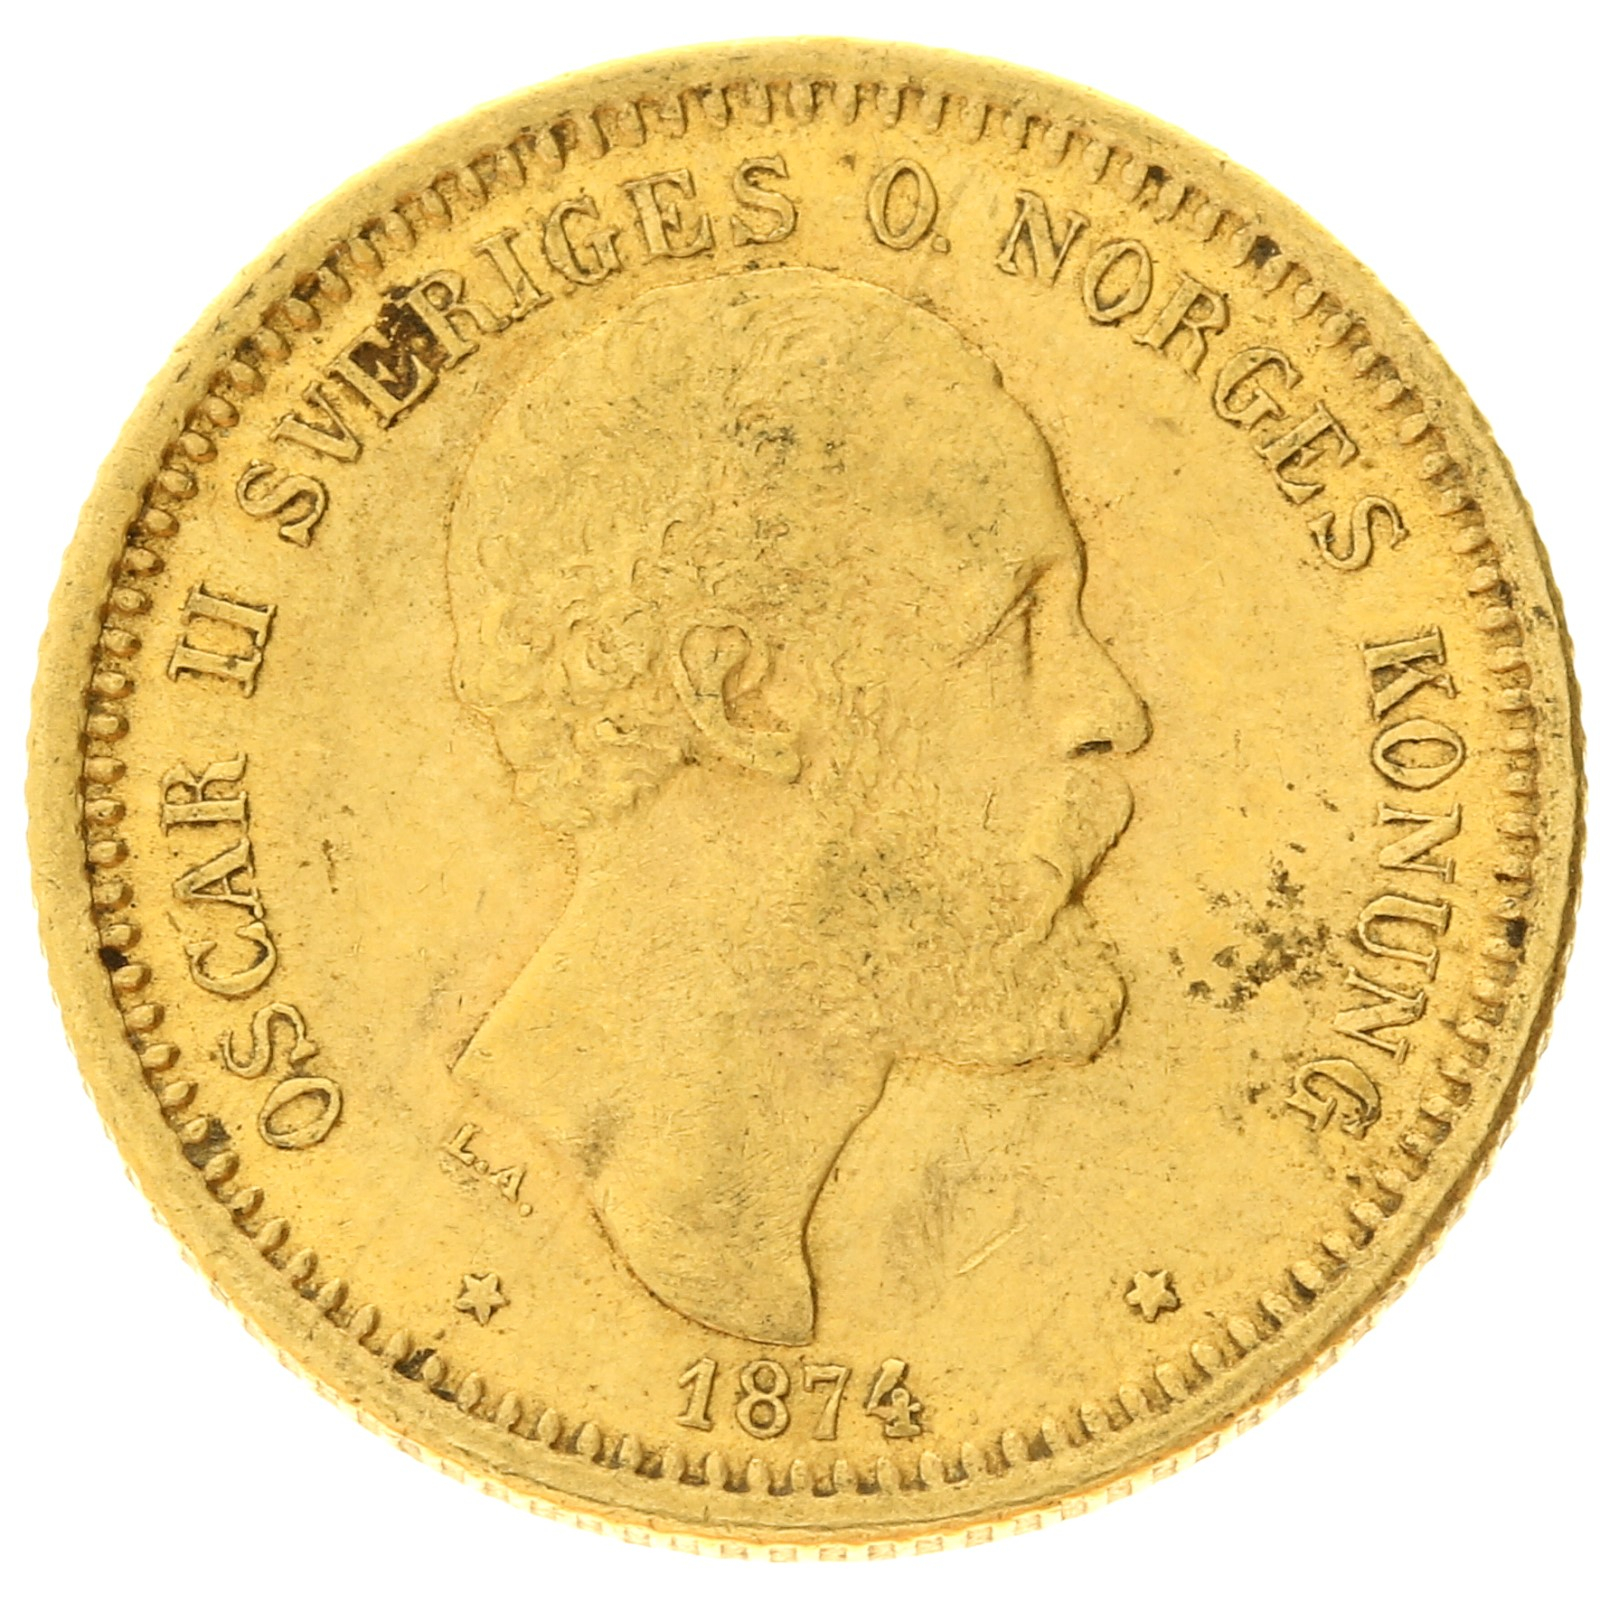 Sweden - 10 kronor - 1874 - Oscar II 